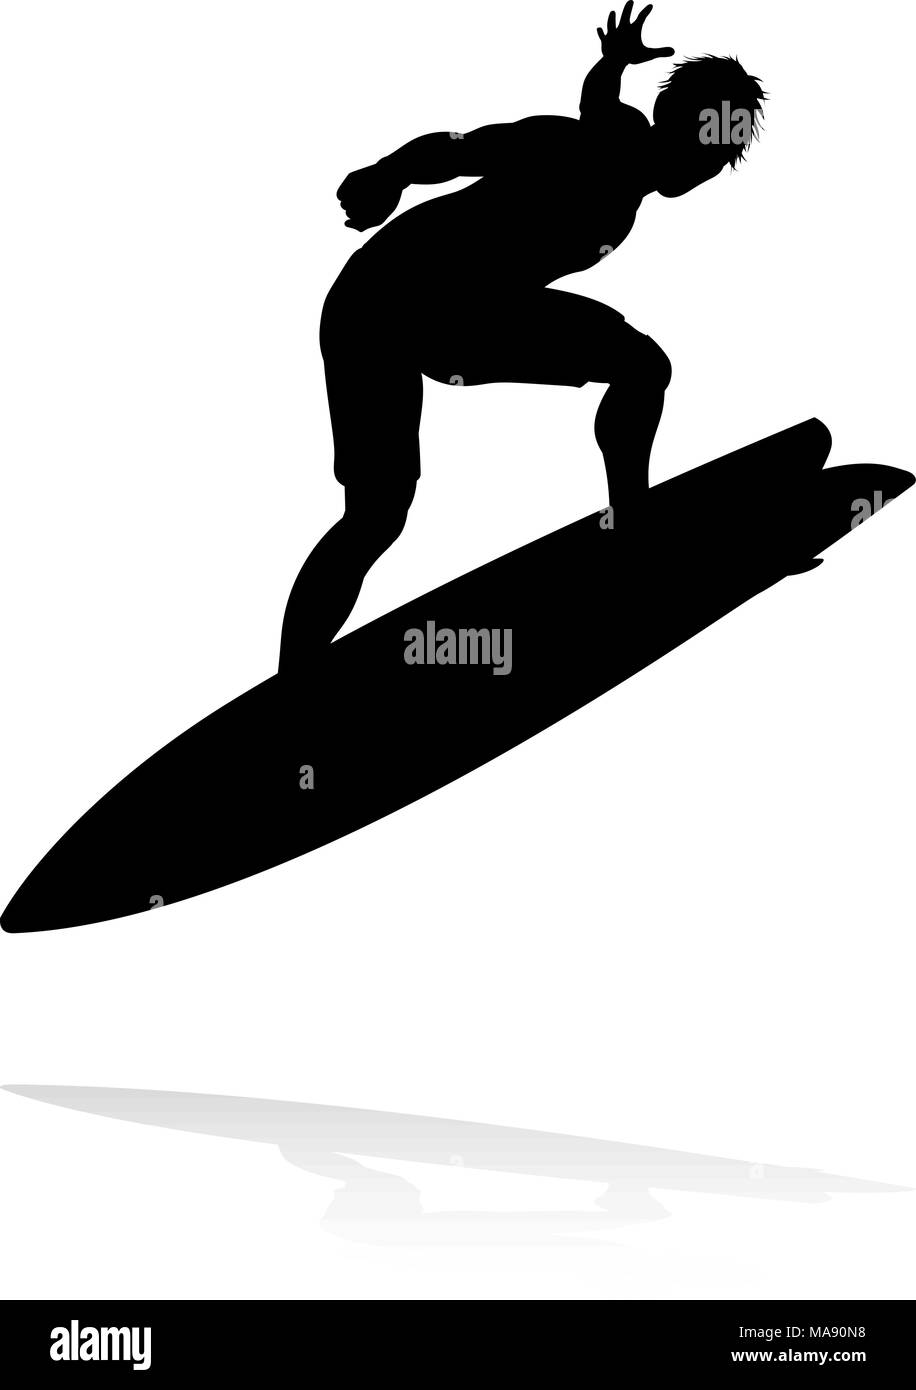 Surfer Silhouette Stock Vector